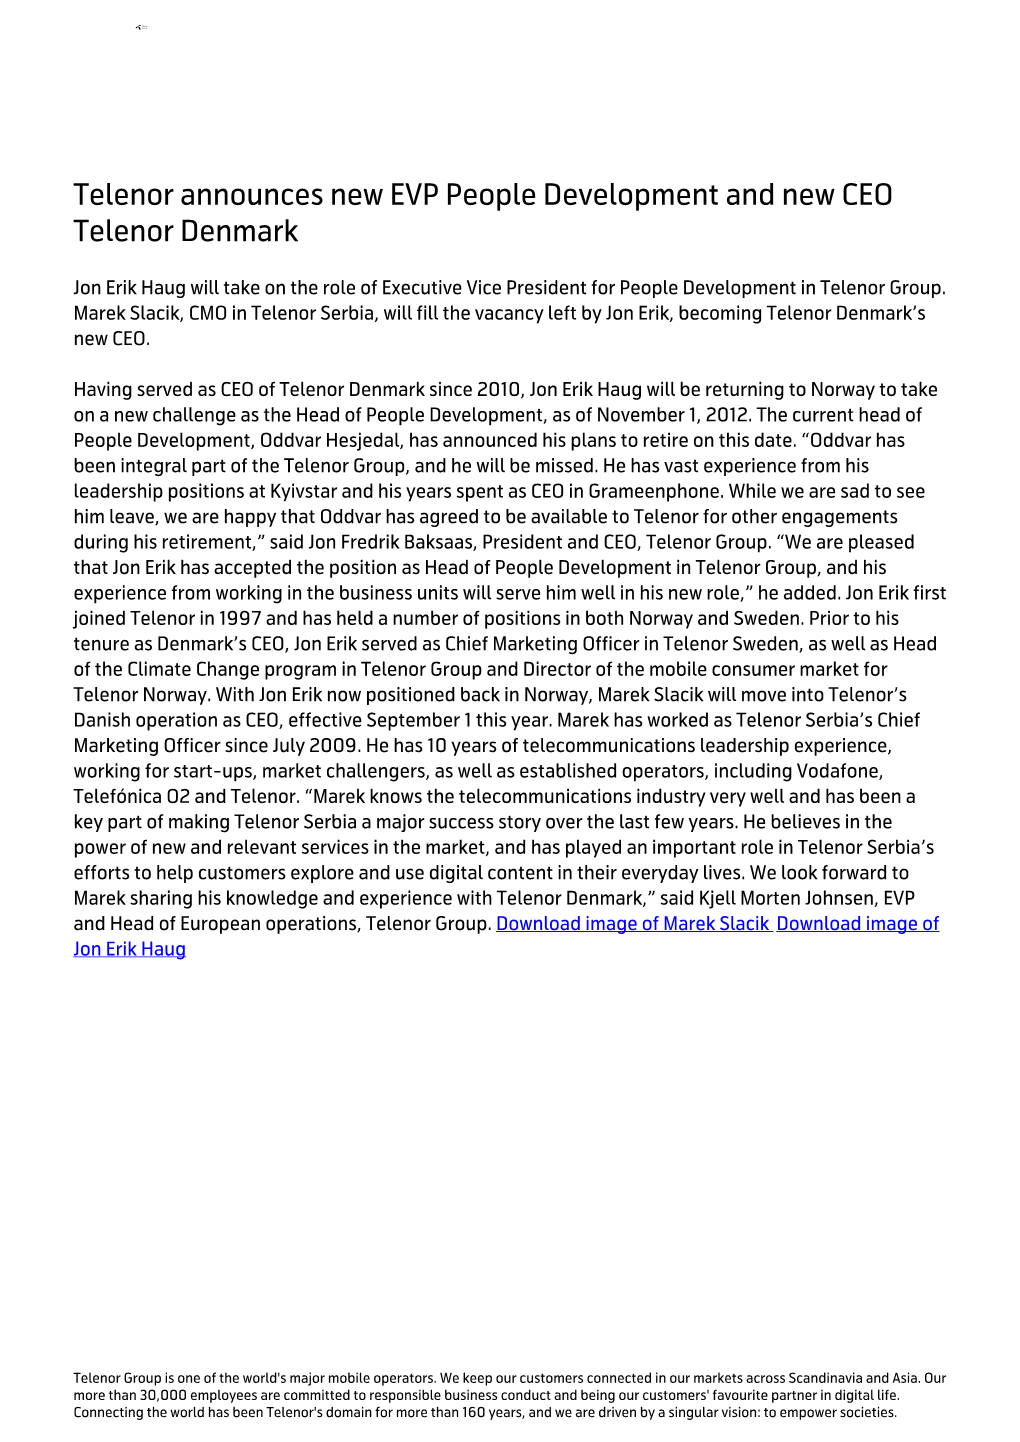 Telenor Announces New EVP People Development and New CEO Telenor Denmark